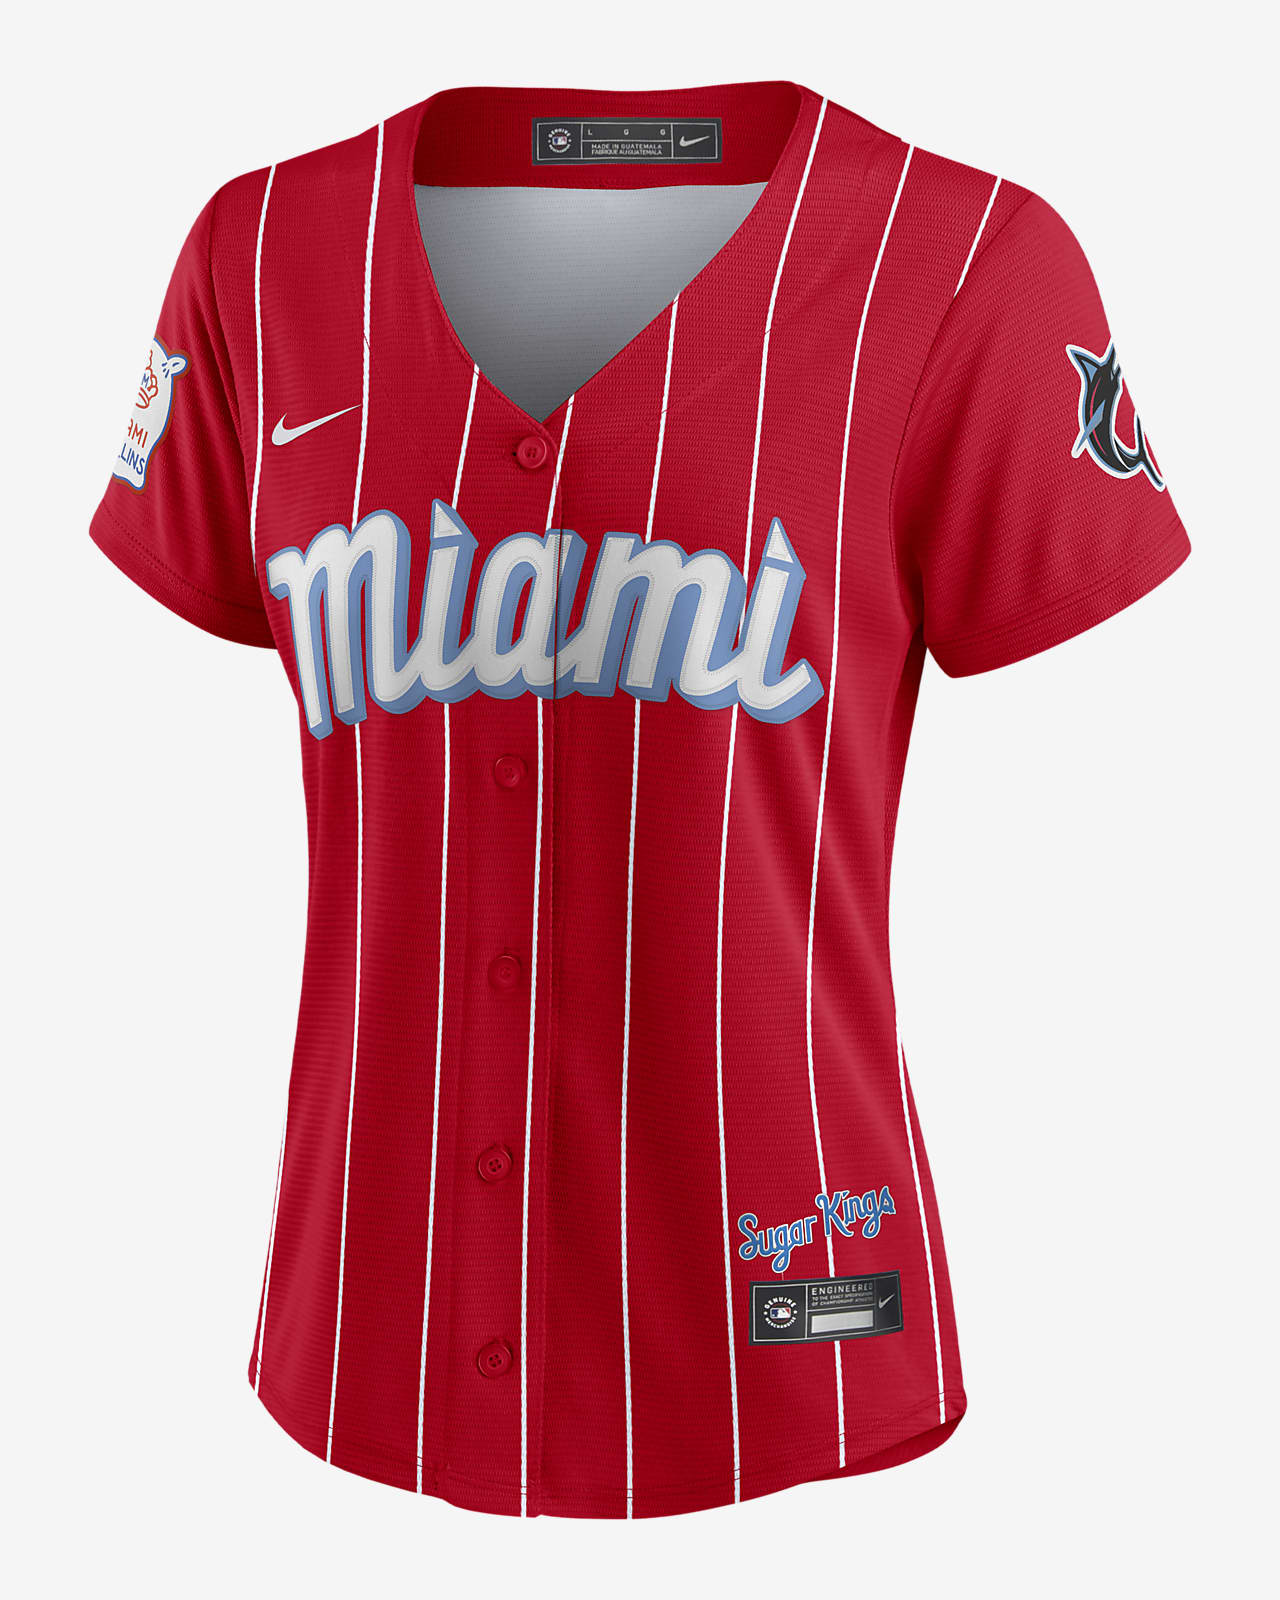 MLB Miami Marlins City Connect Women's Replica Baseball Jersey.